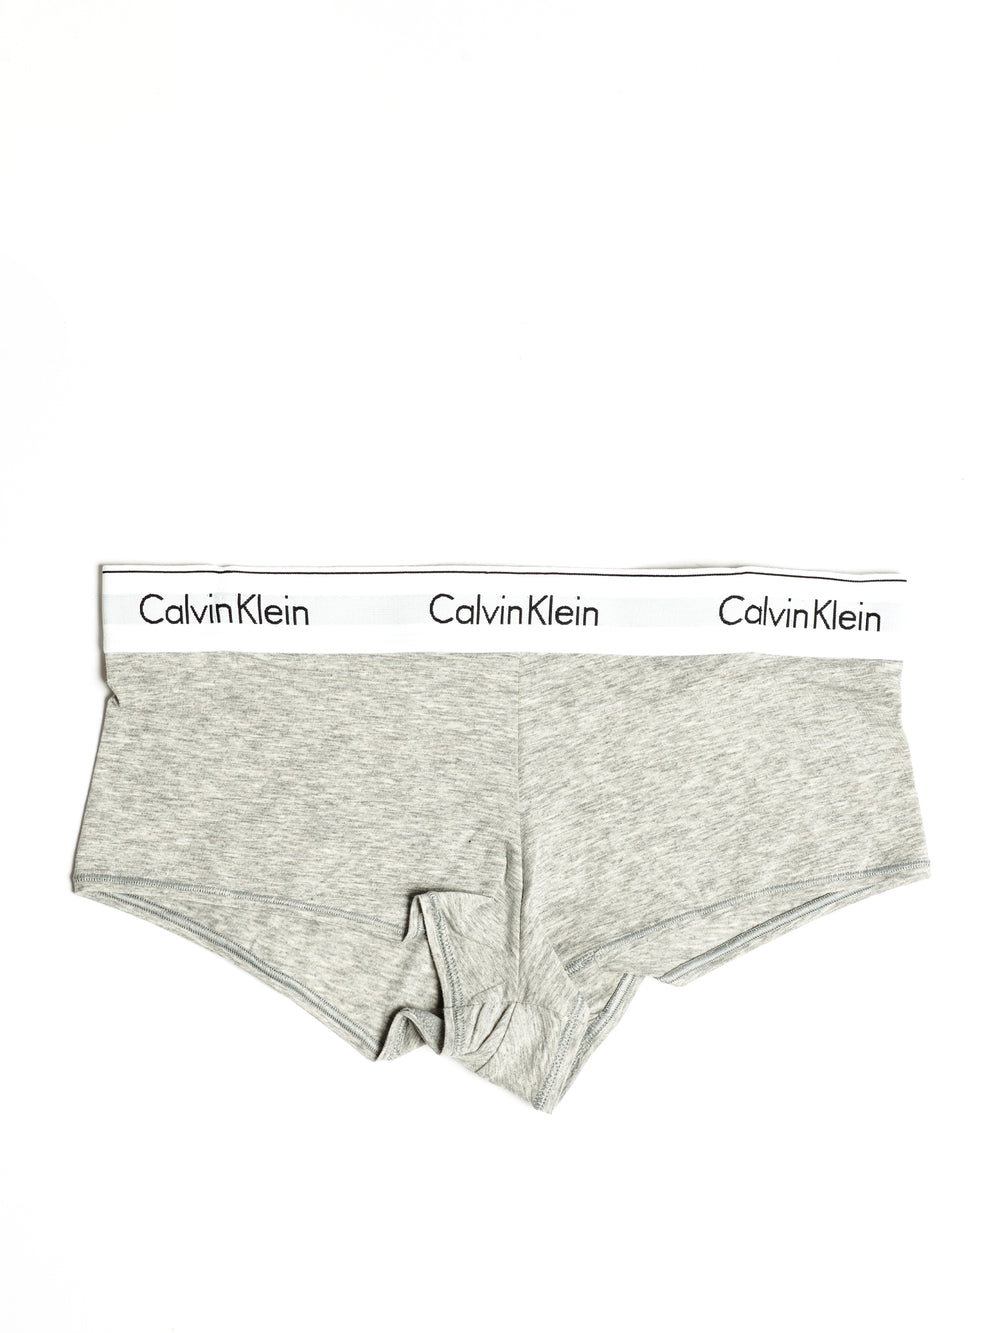 Calvin Klein Regular Size L Boyshort Panties for Women for sale